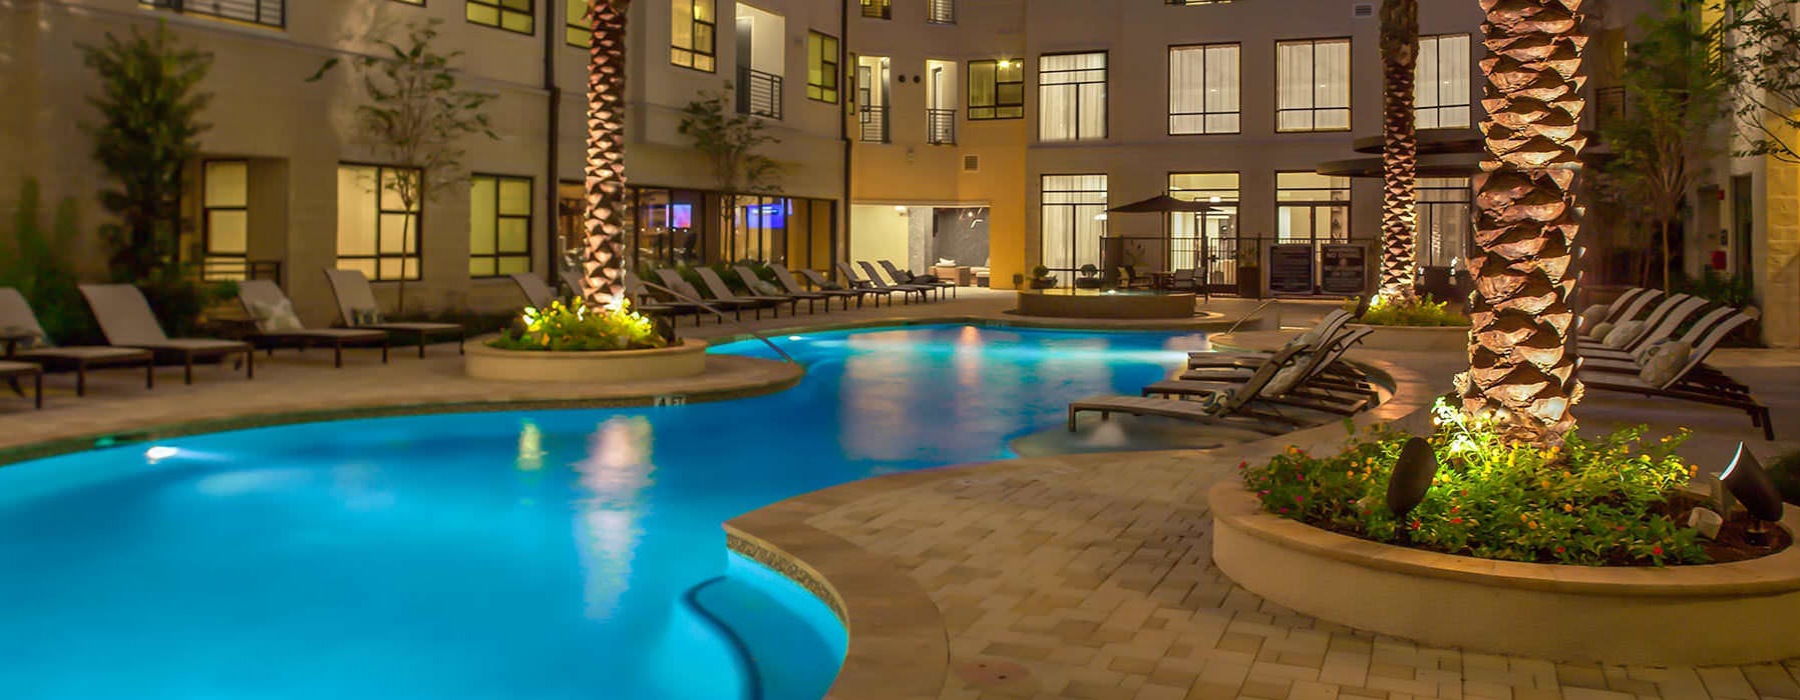 resort style swimming pool lit at night